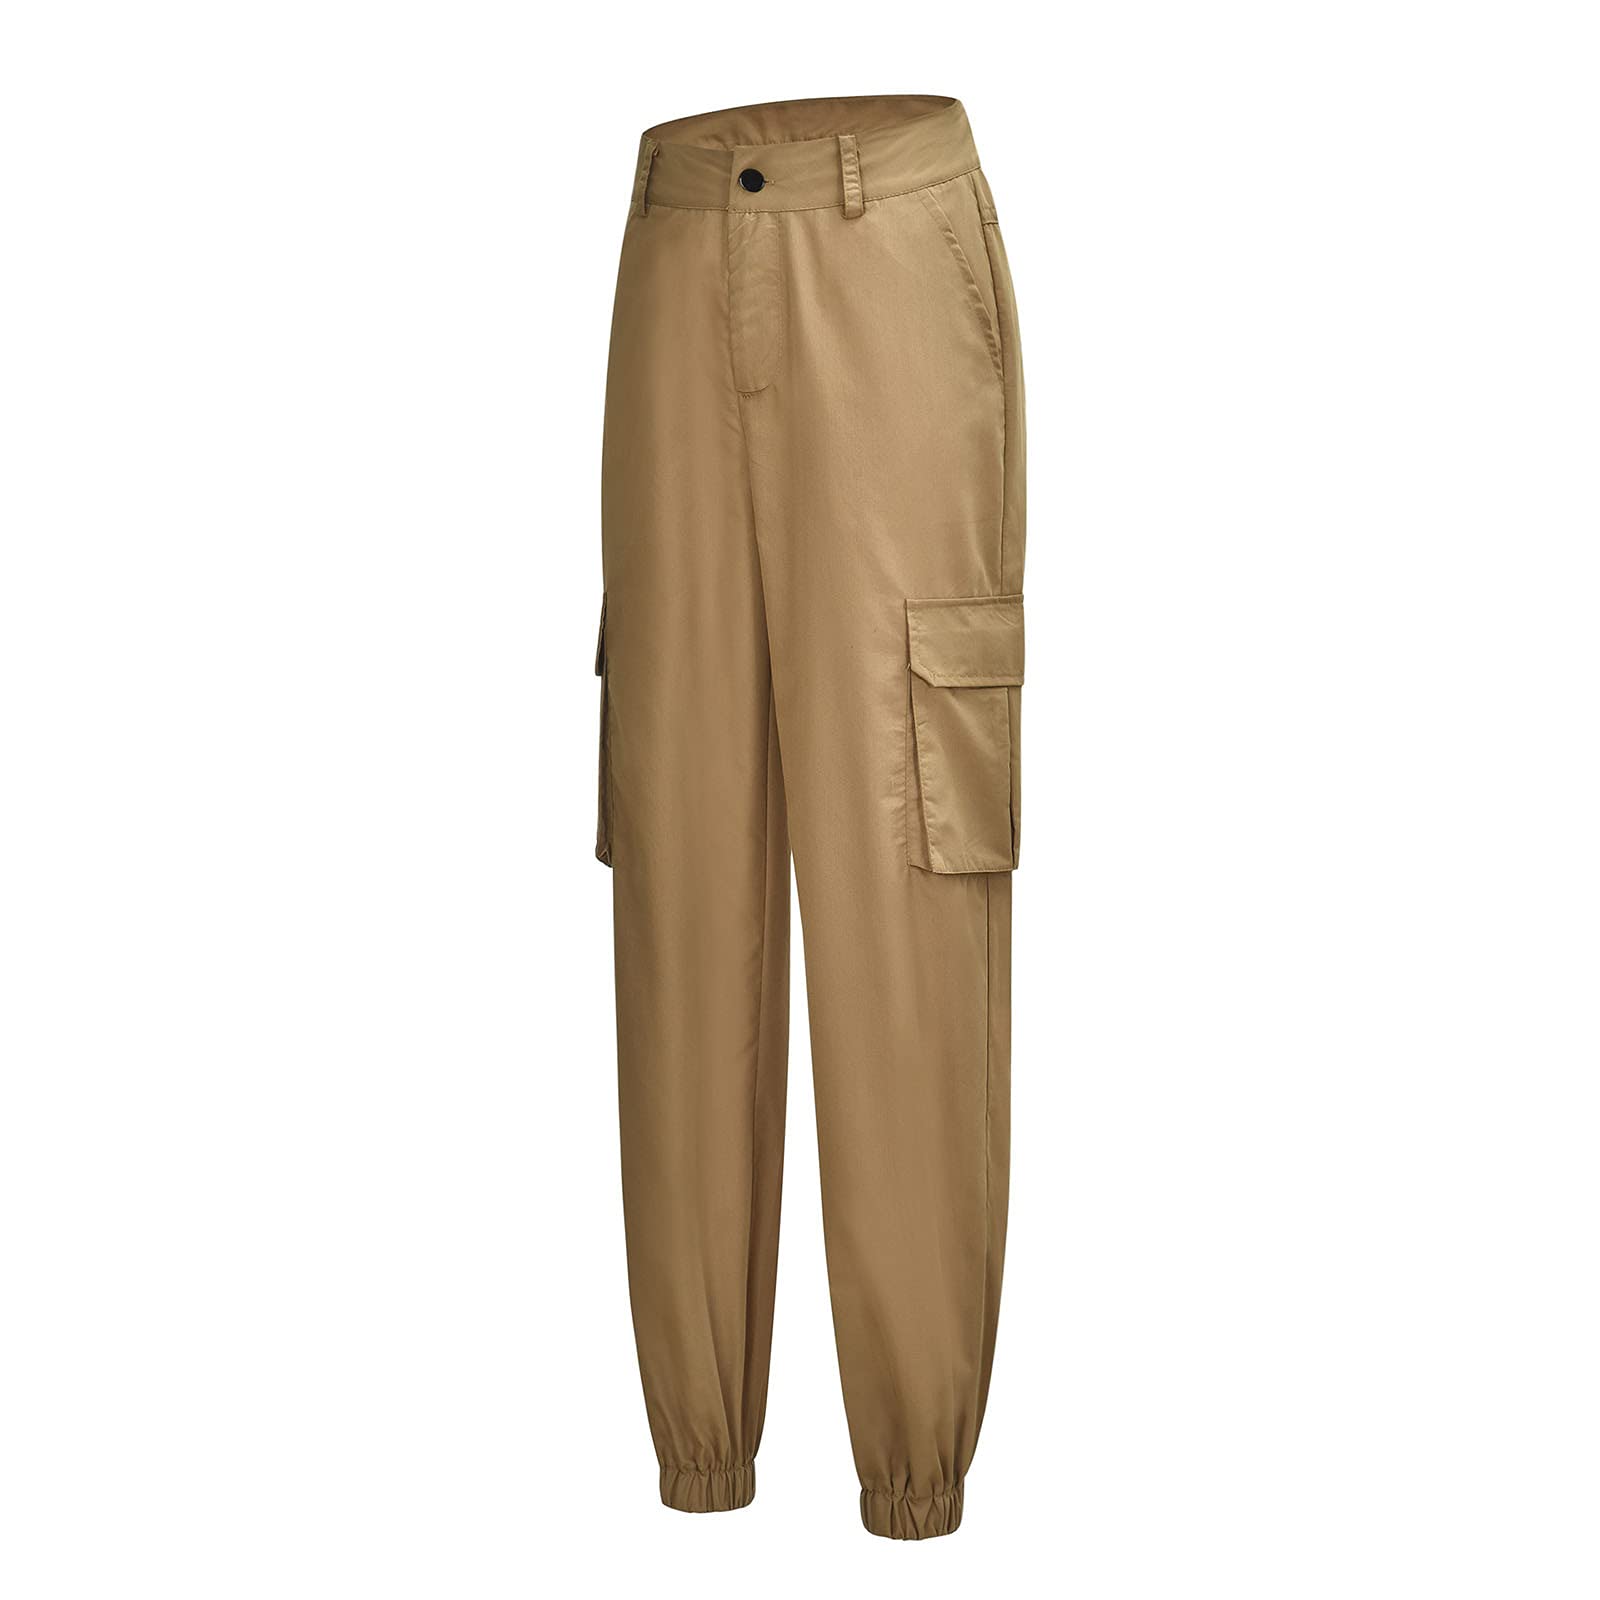 Bravetoshop Women's Cargo Pants Slim Fit Multi-Pocket Casual Pants Lightweight Outdoor Combat Hiking Trousers (Khaki,S)